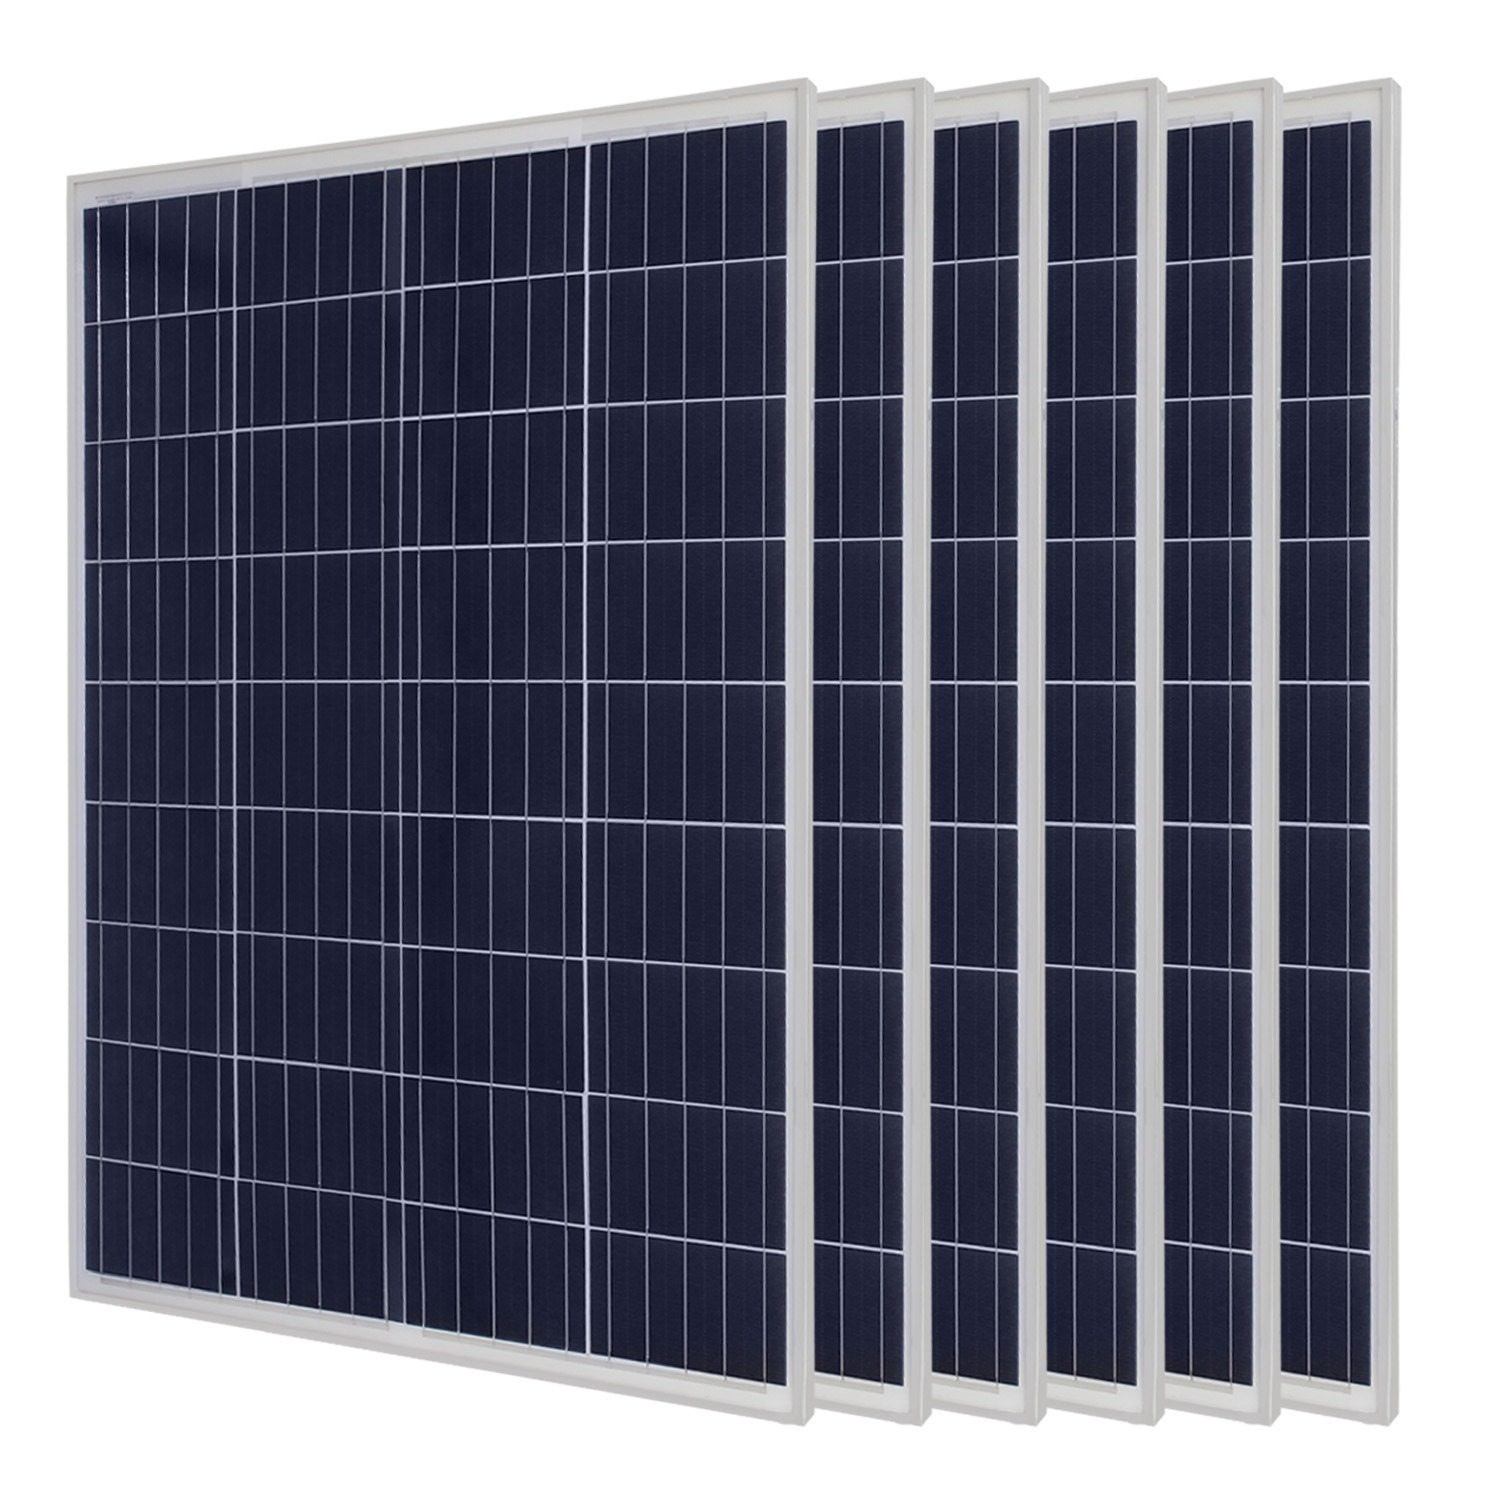 100Watt Solar Panel 12V Poly Battery Charger for Wind Turbine Generator - 6 Pack